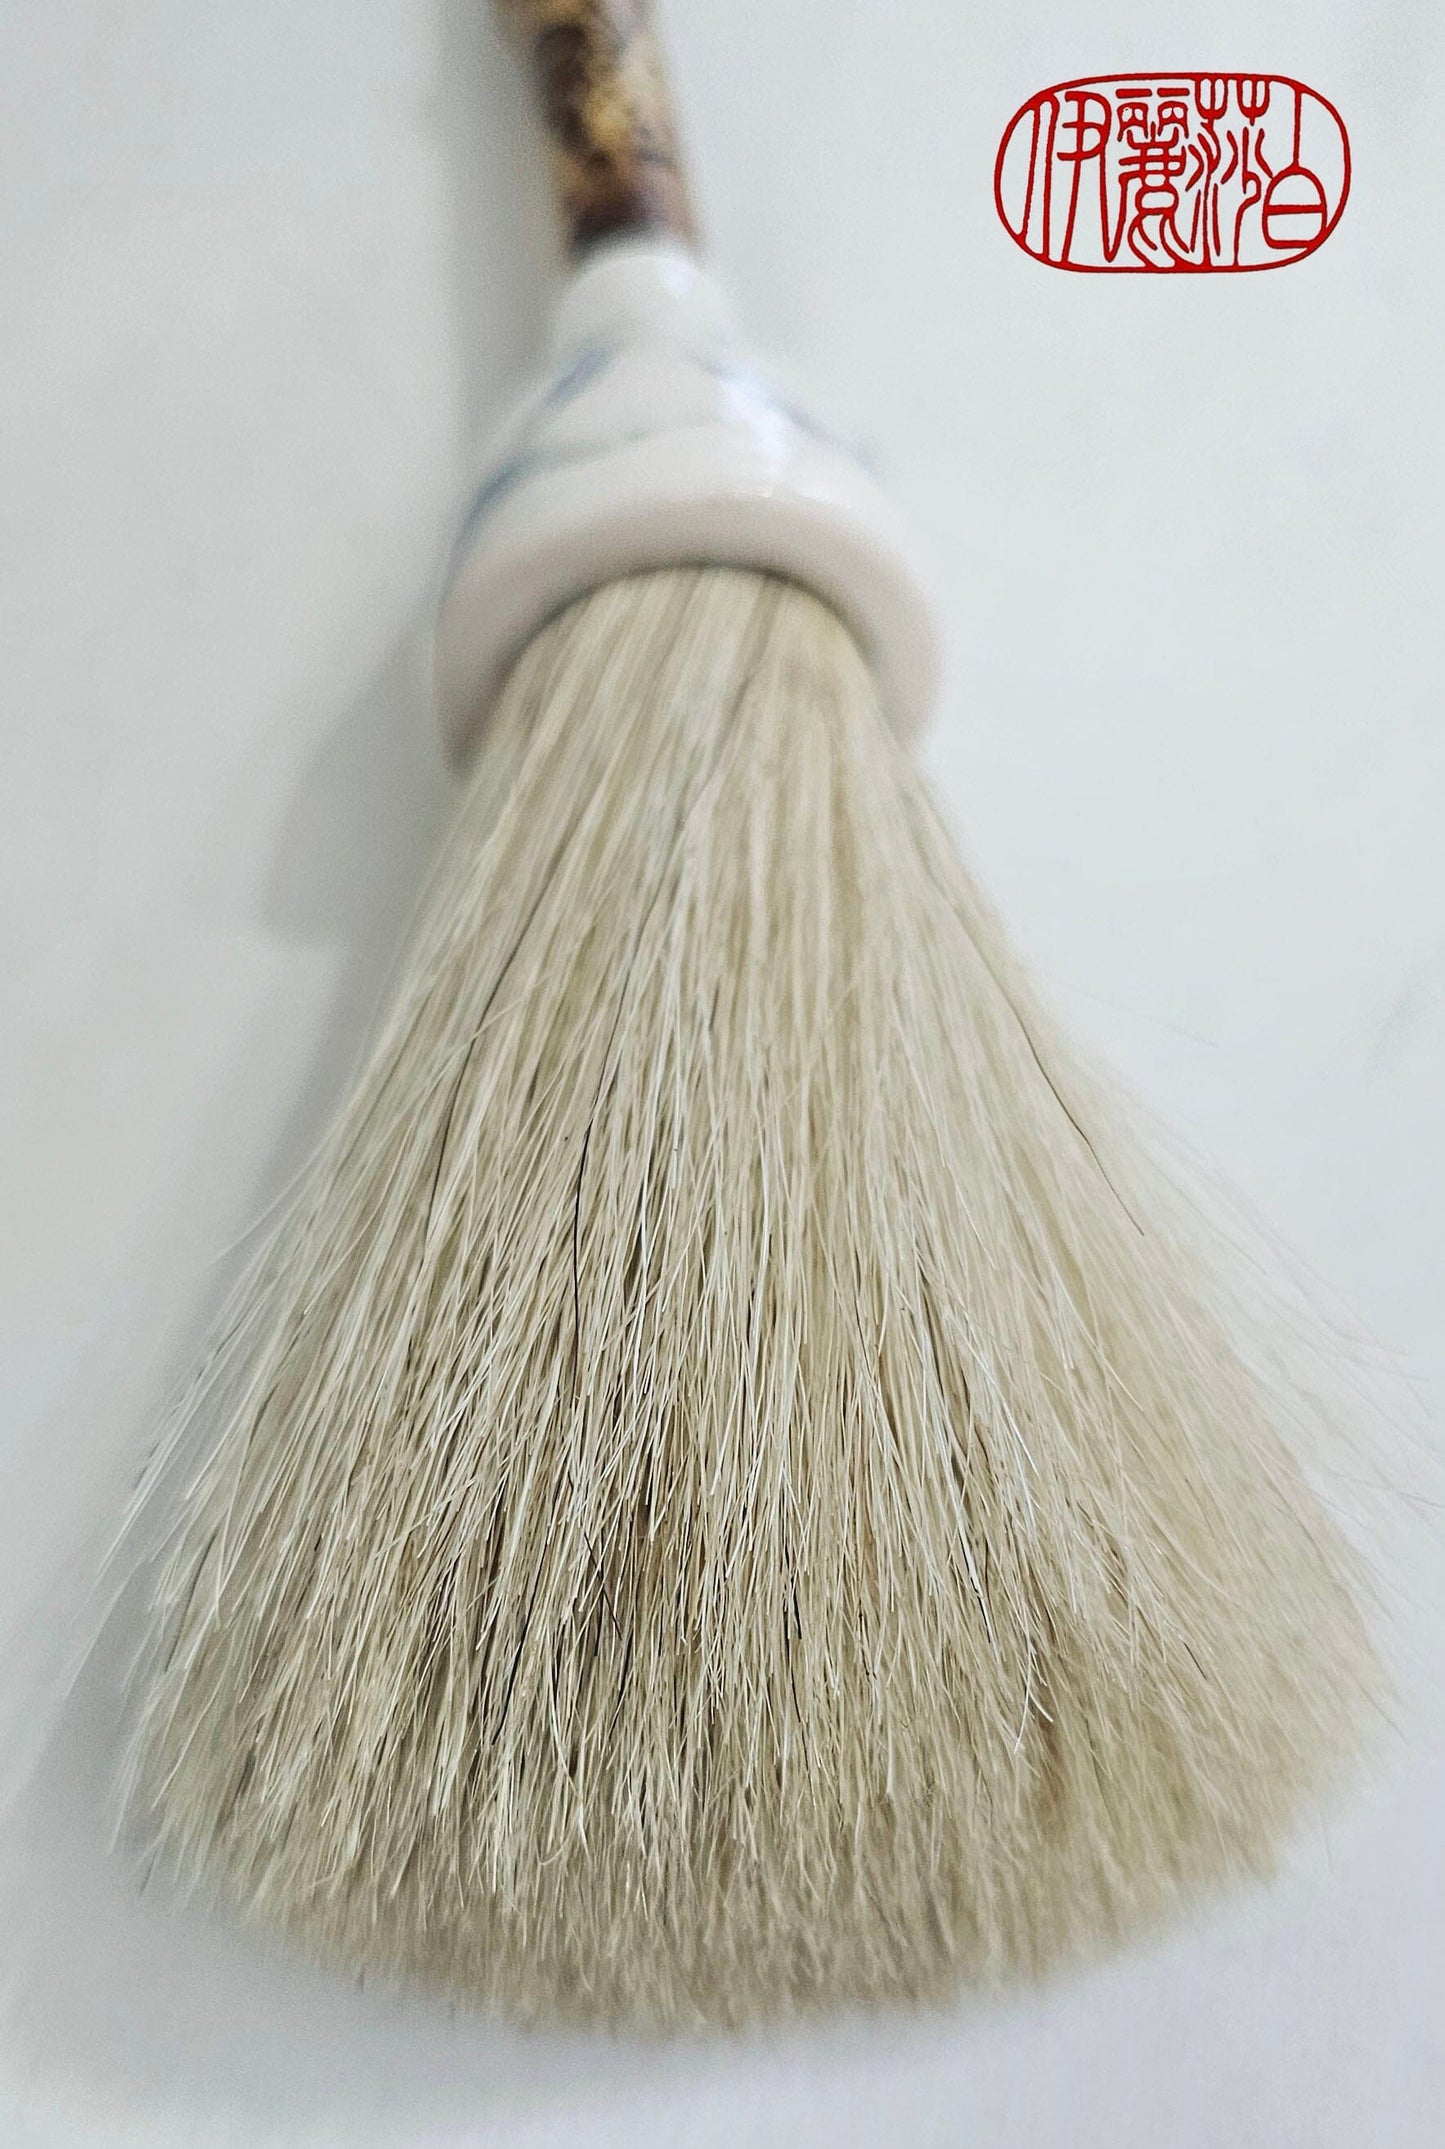 3.75" White Horsehair Sumi-e Paint Brush With Ceramic Ferrule Paint Brush Elizabeth Schowachert Art